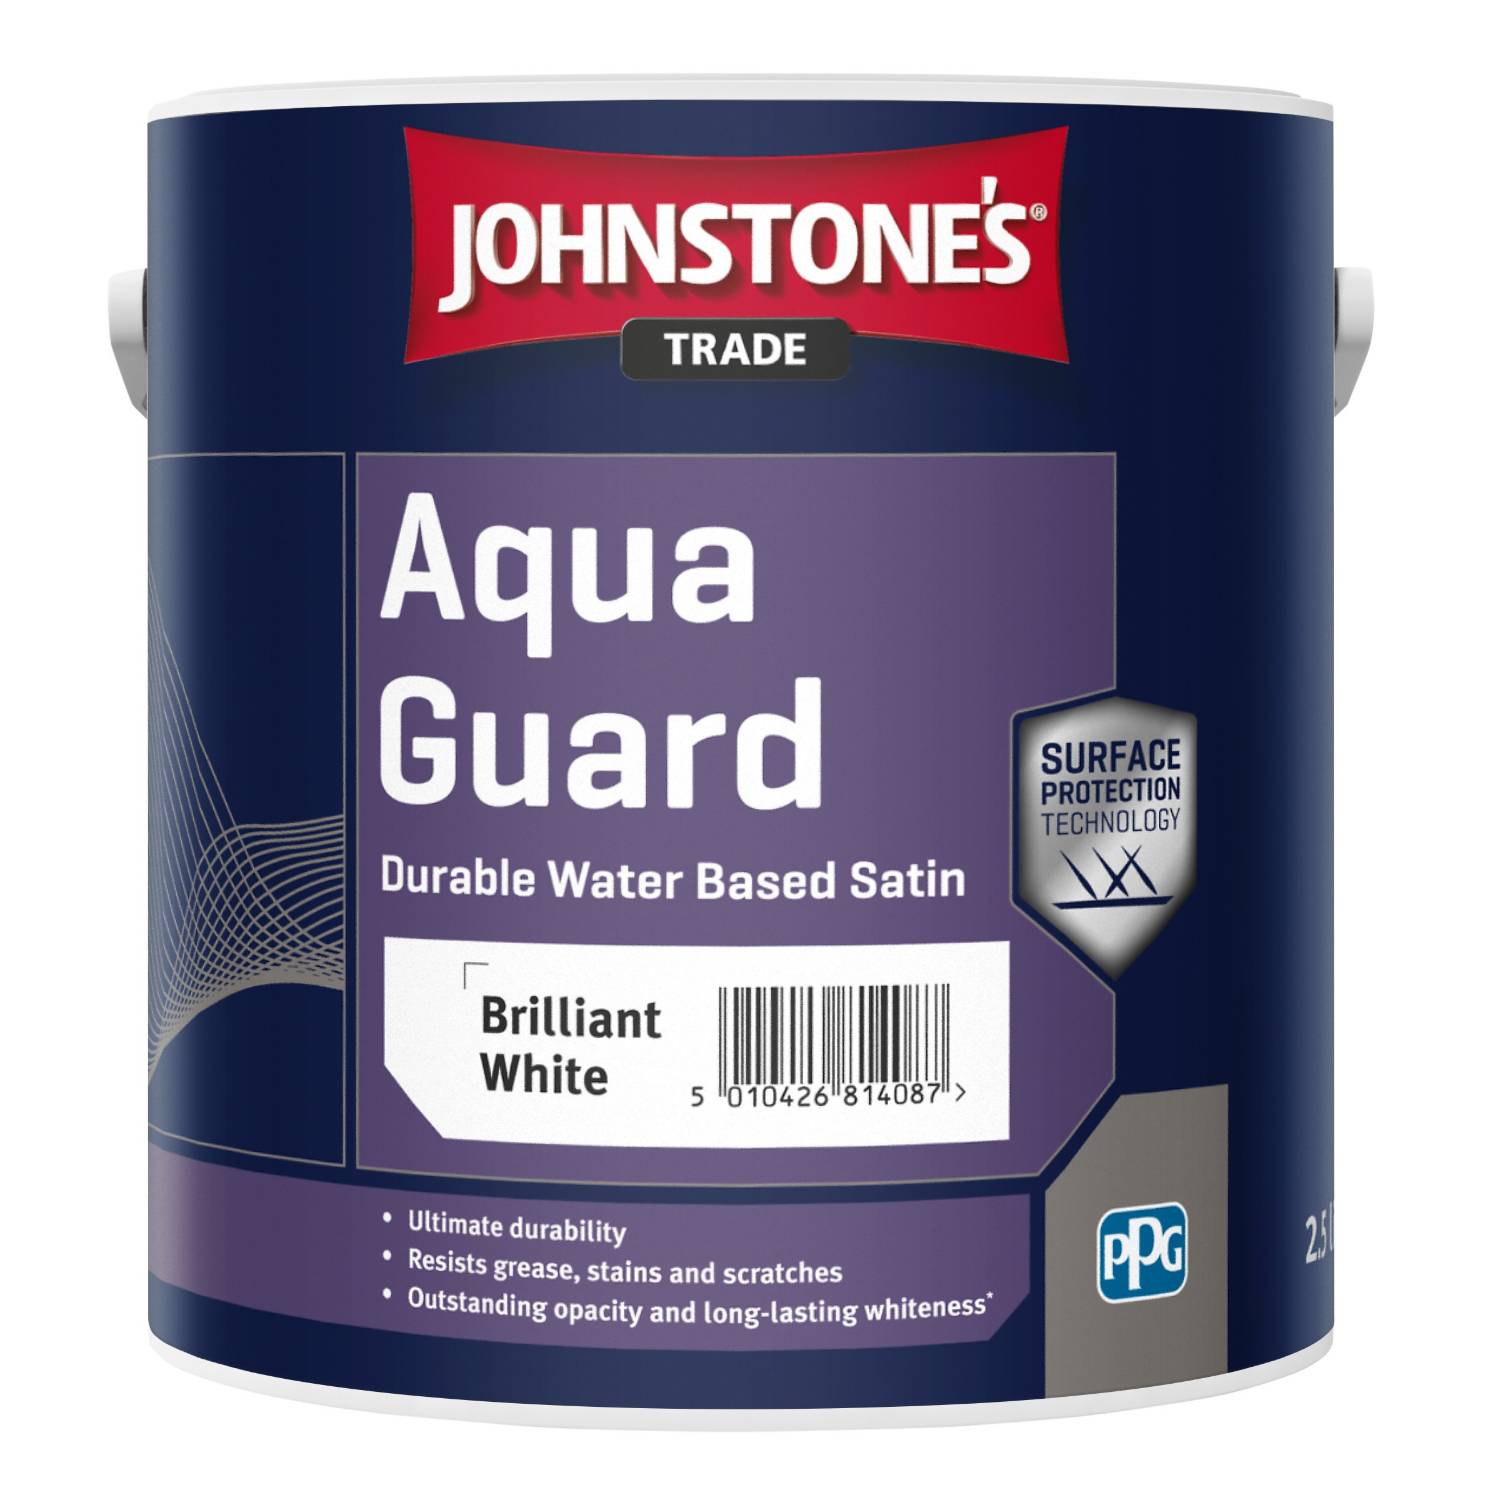 Aqua Guard Durable Satin Finish